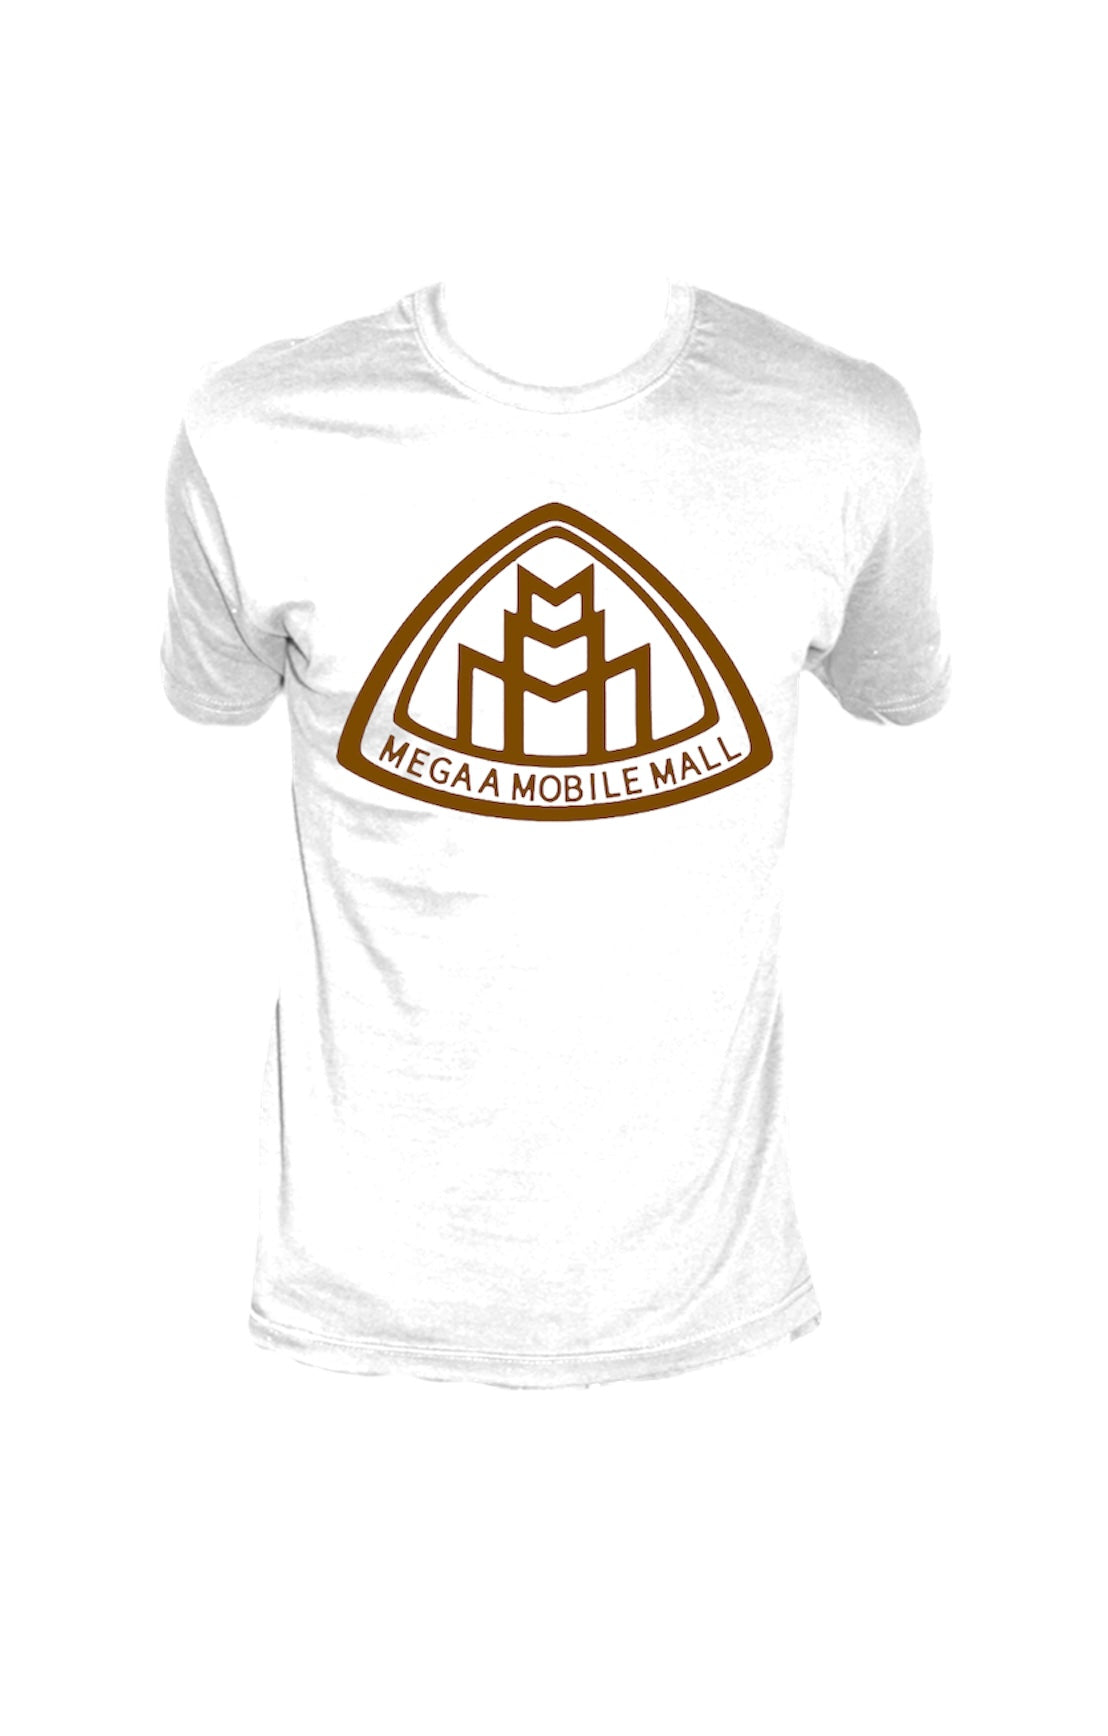 megaamobilemall Logo Shirt brown logo